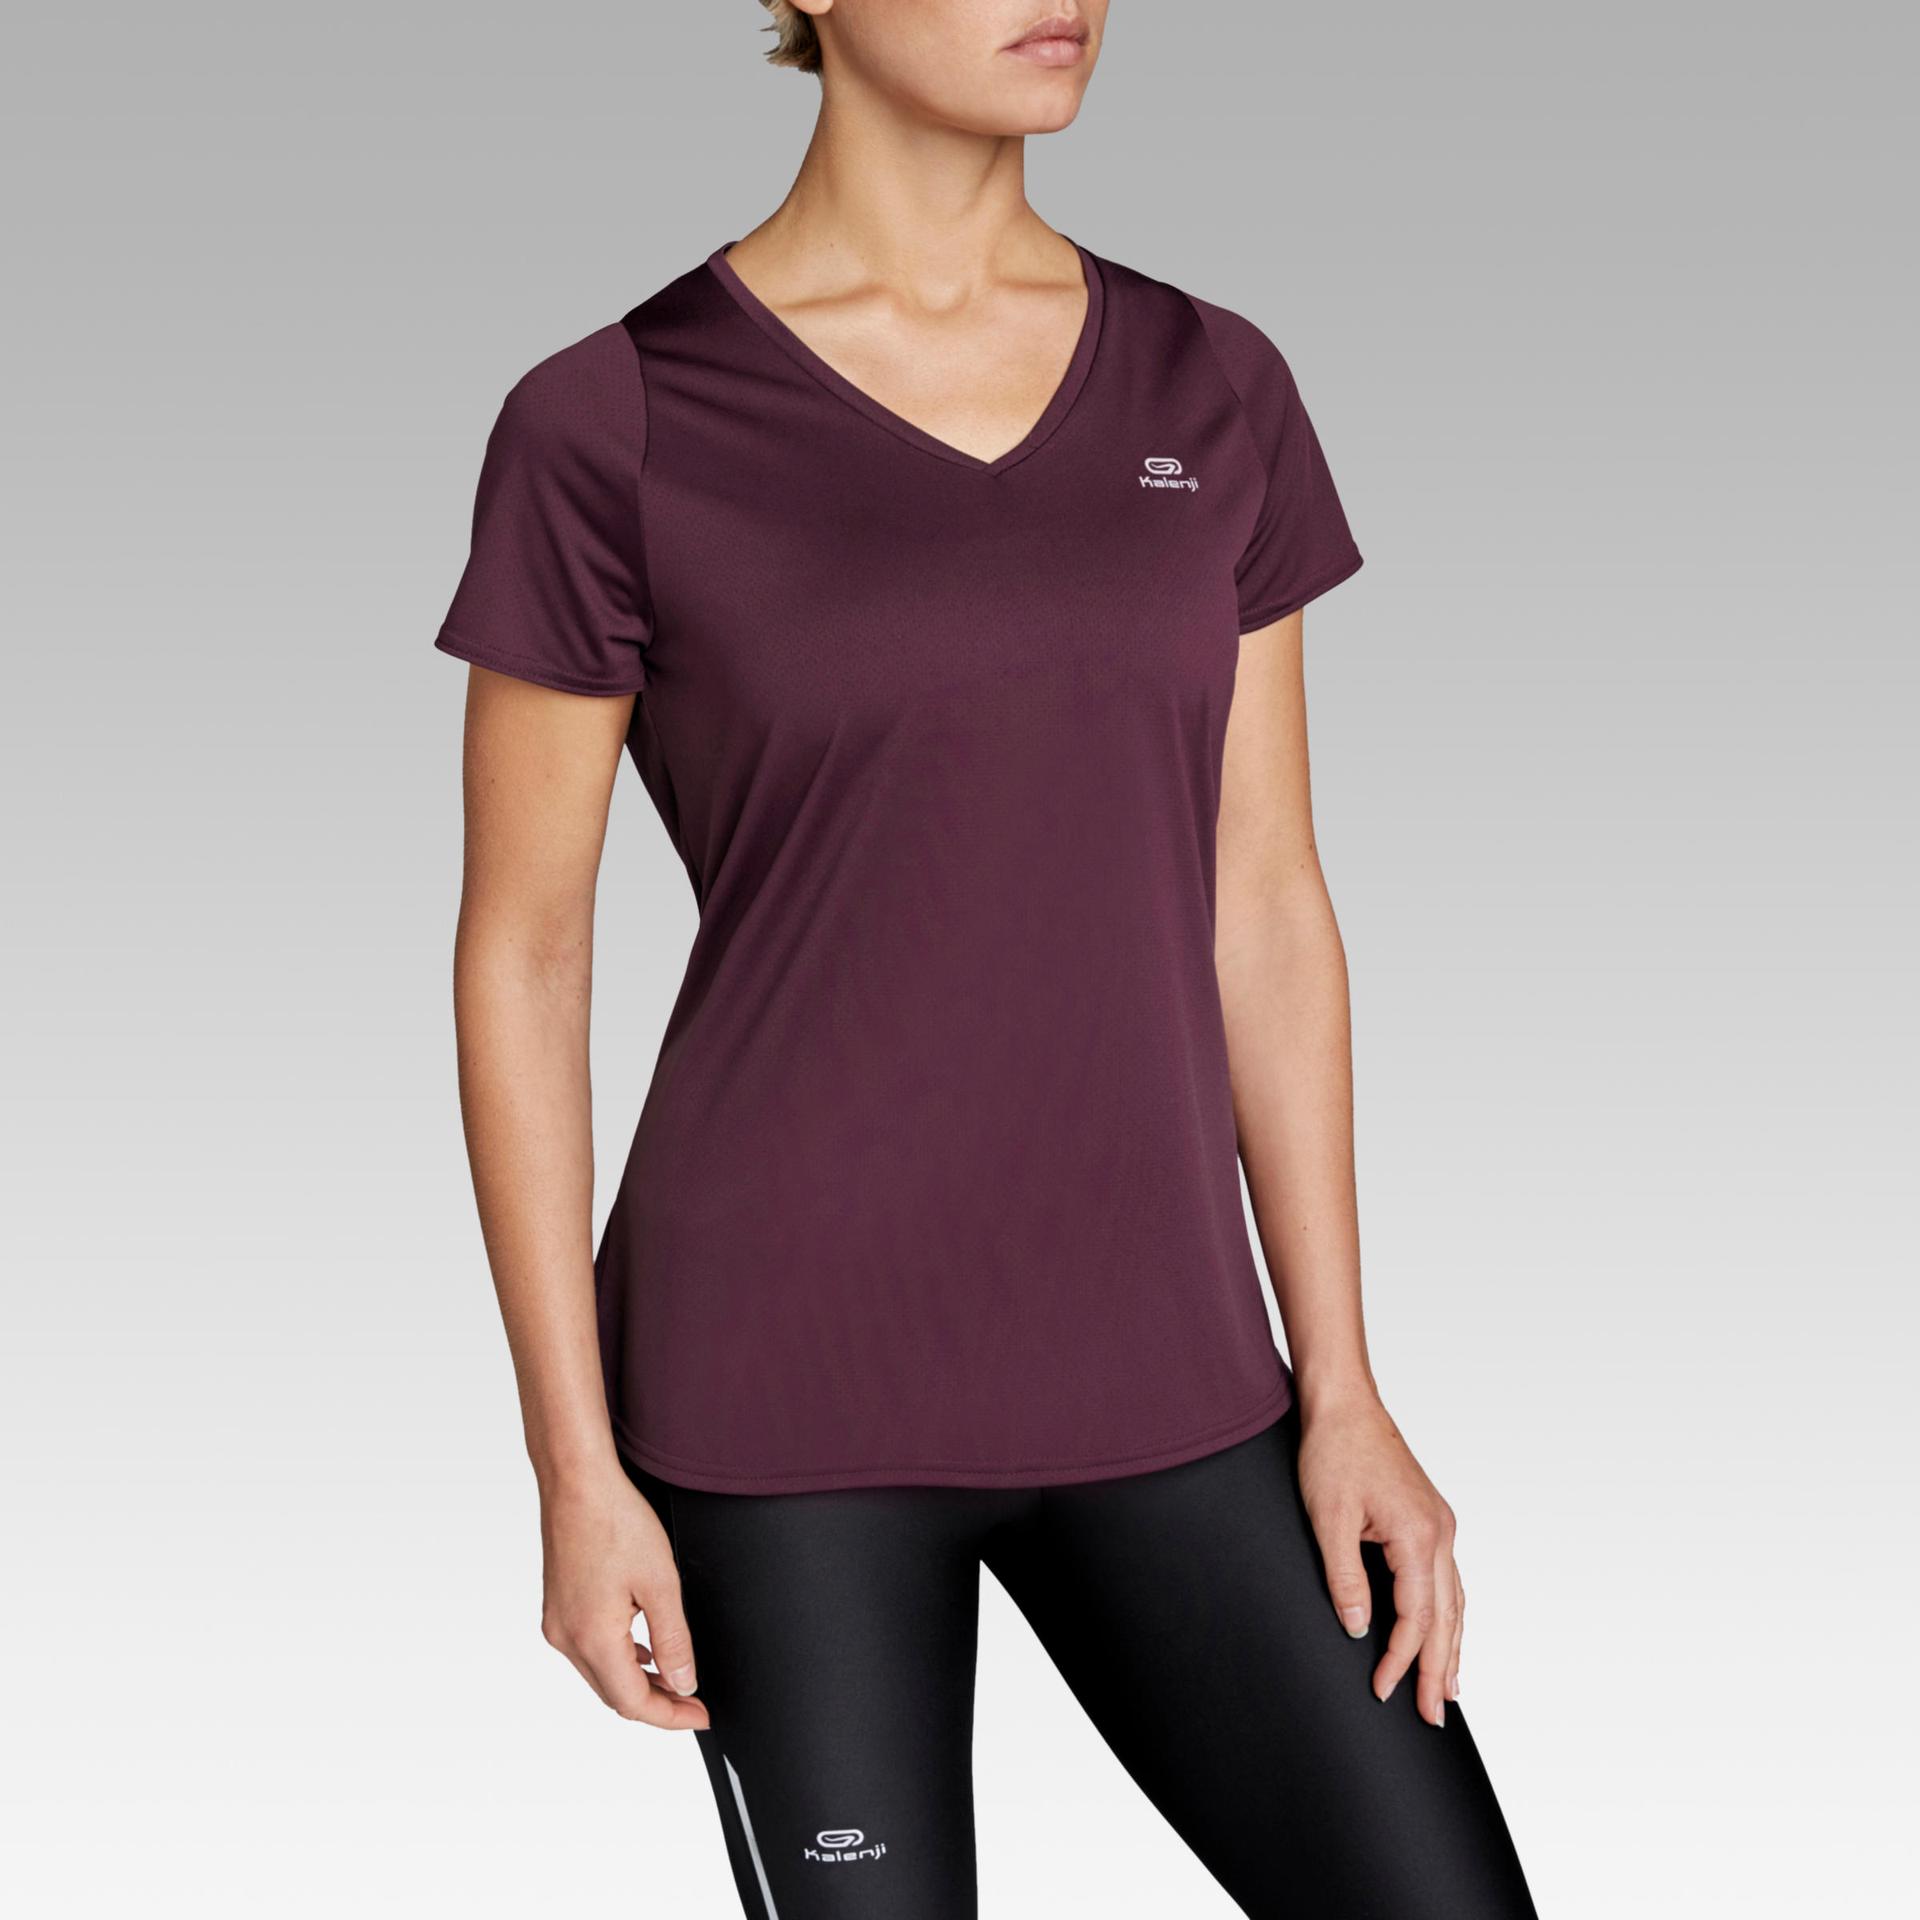 women's-short-sleeved-breathable-running-t-shirt-dry---purple